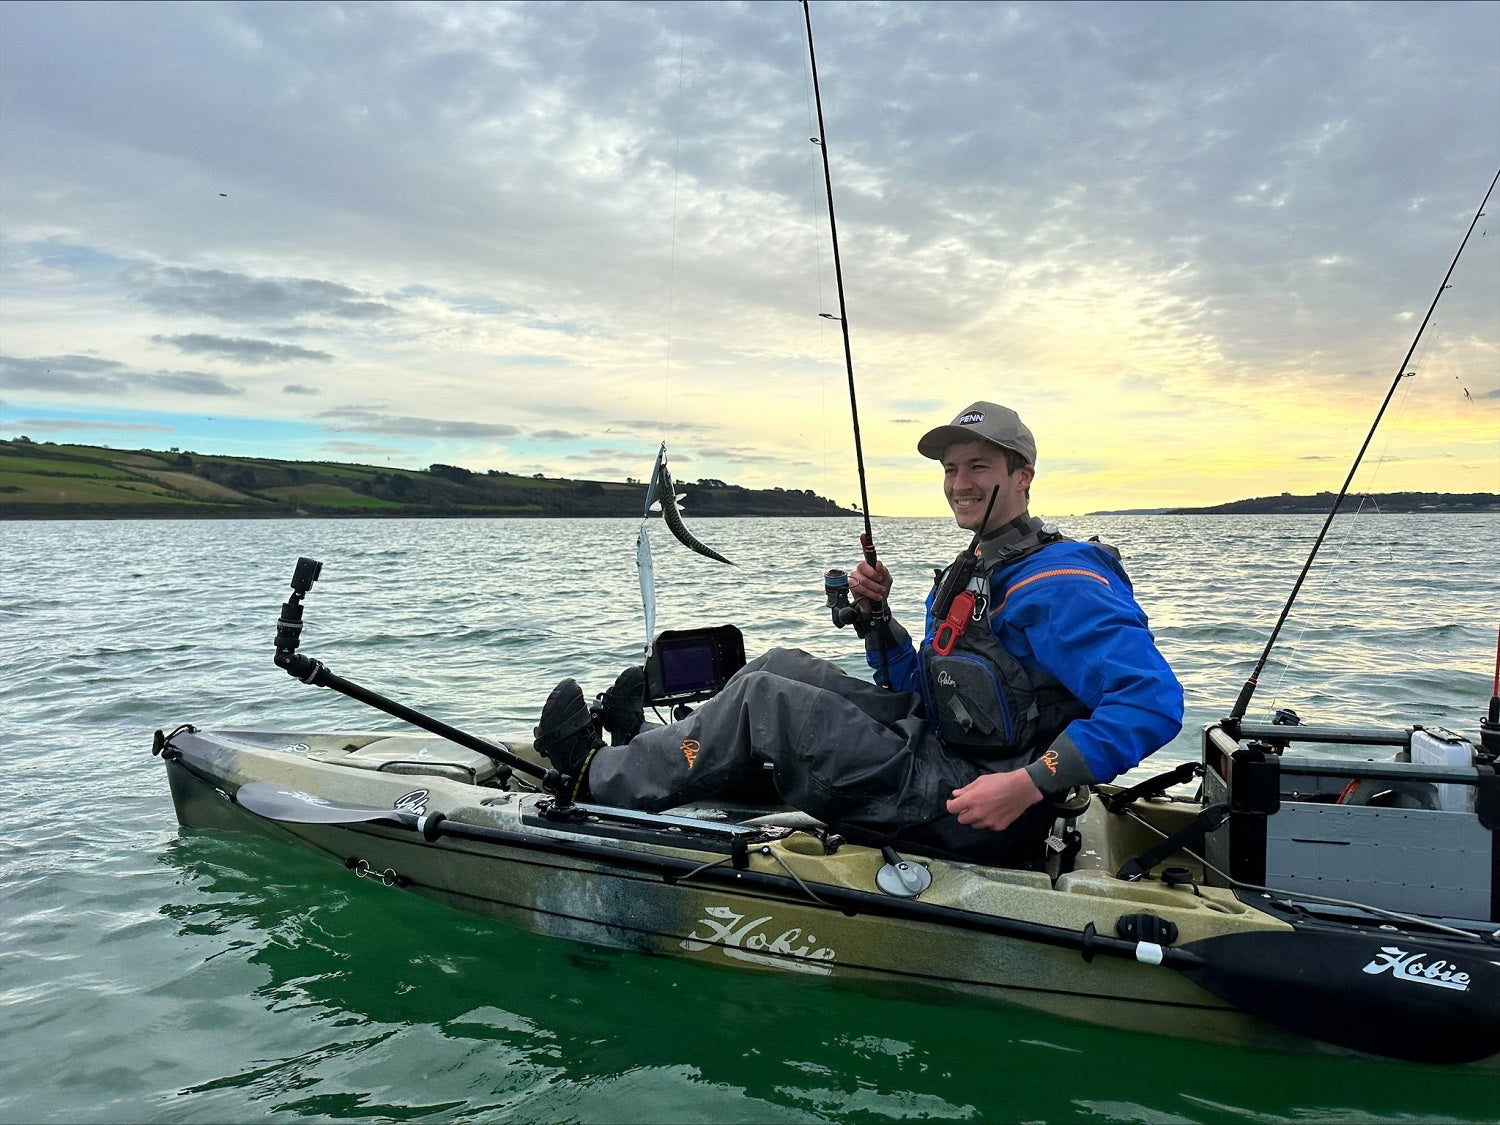 Liam using a Palm Kola Angler buoyancy aid for kayak fishing